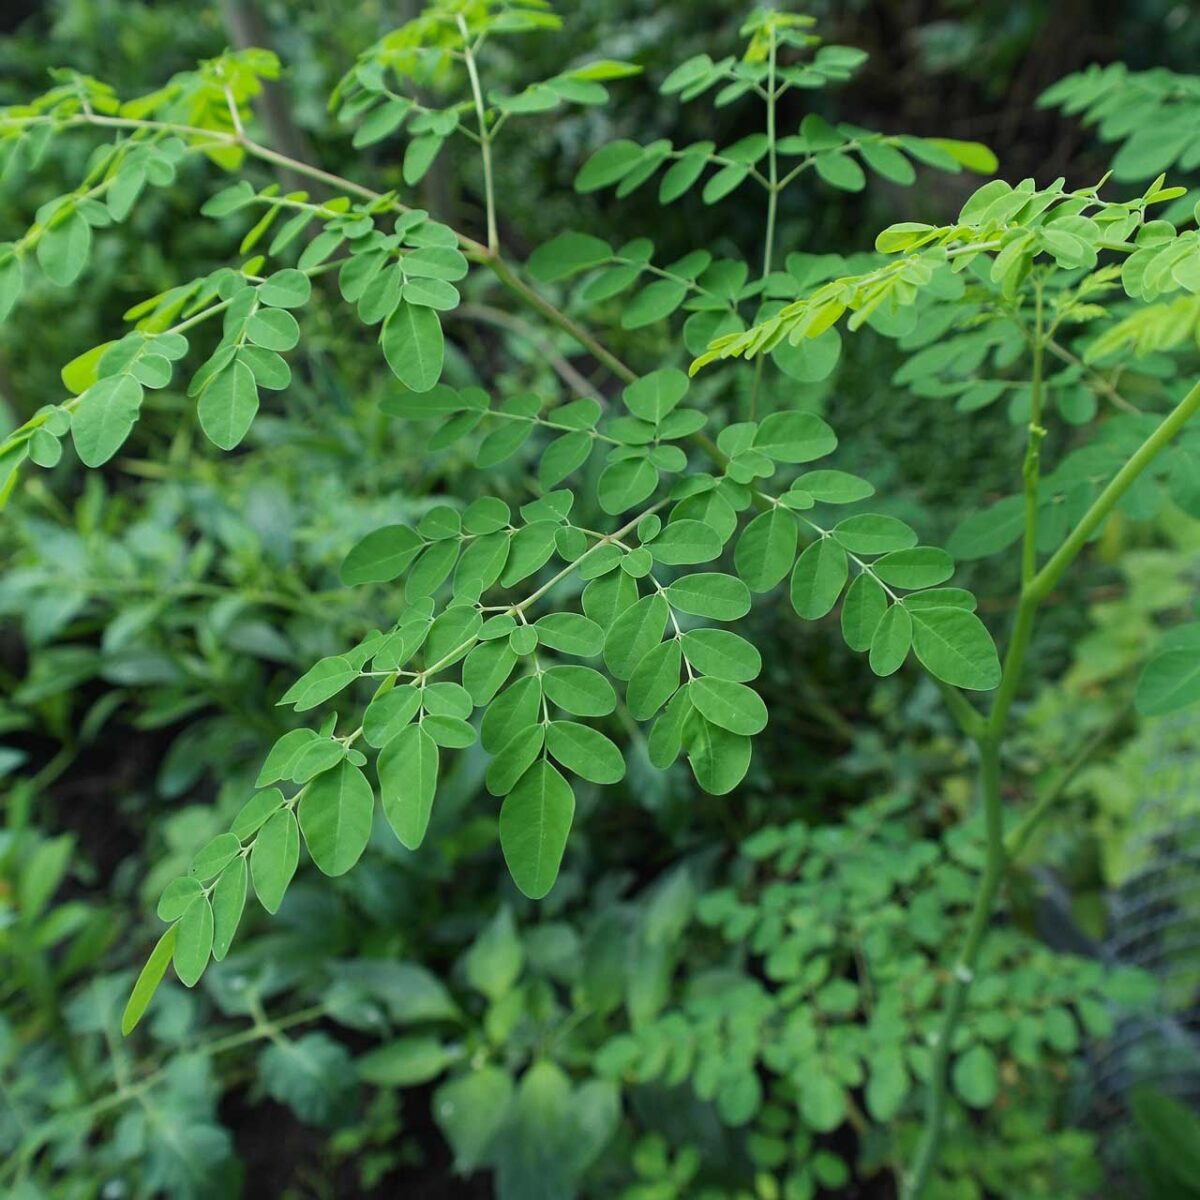 Moringa oleifera (malunggay) leaves